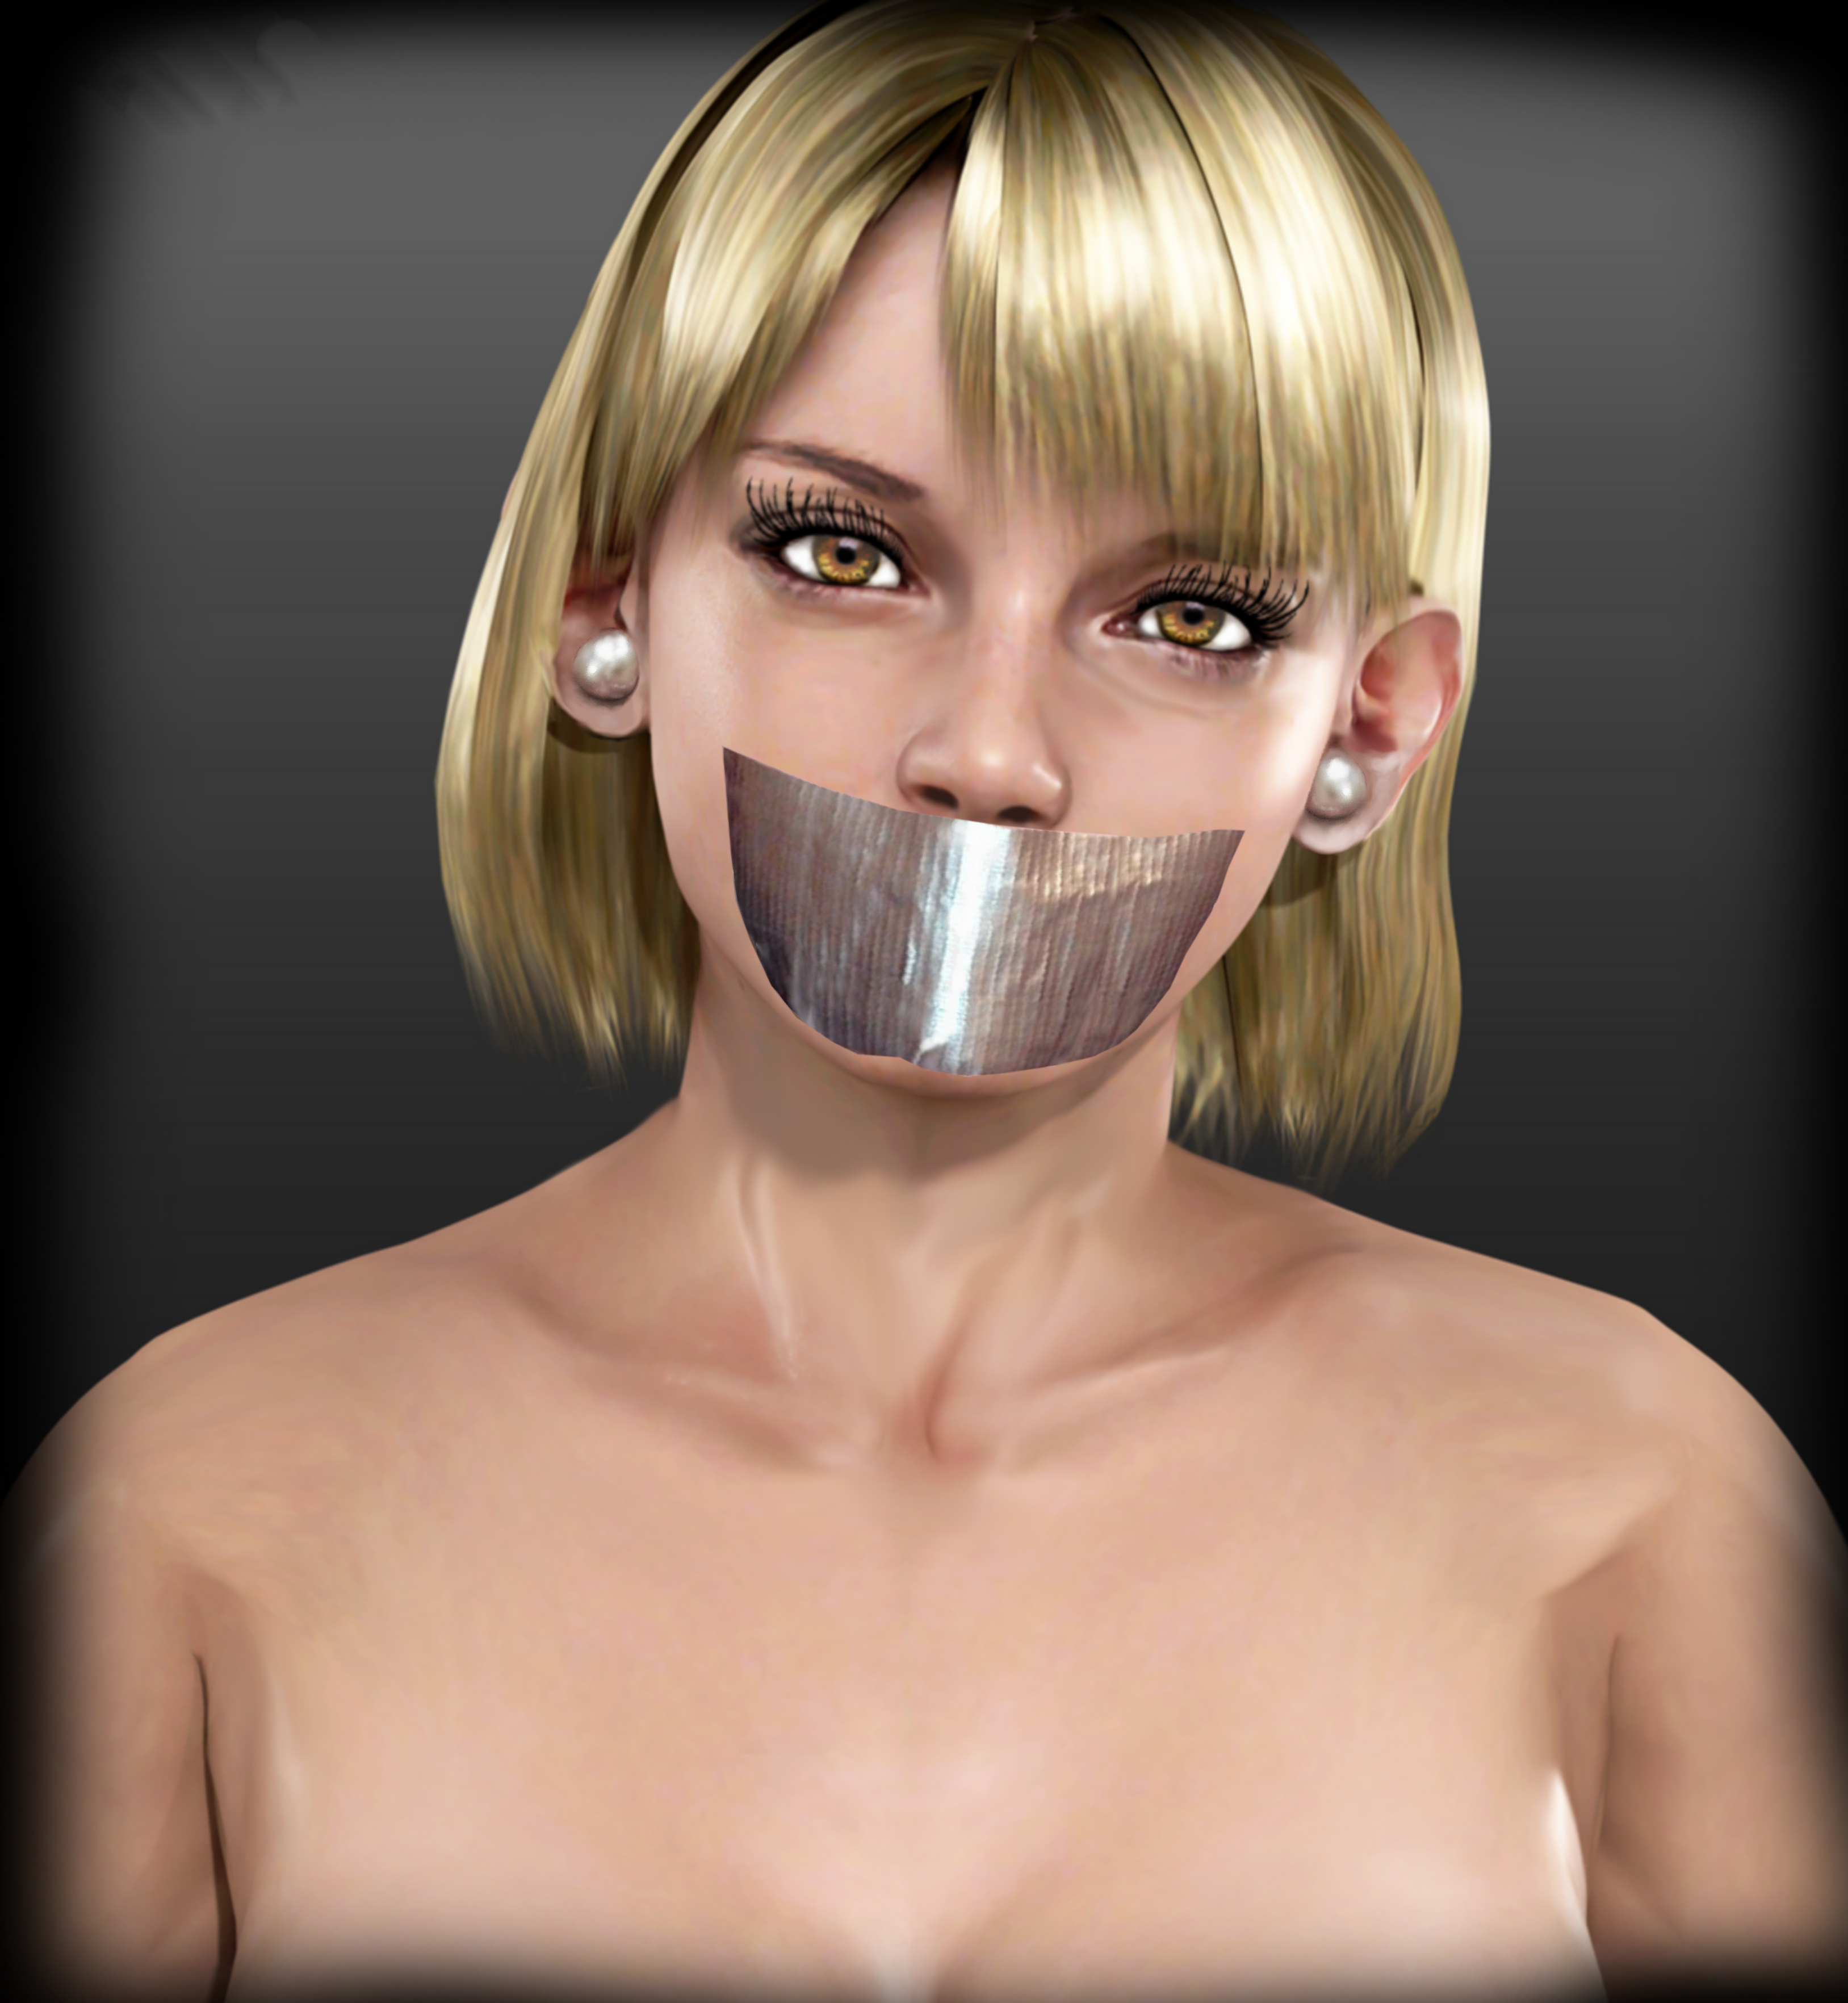 Sims 4] Ashley Graham by Tx-Slade-xT on DeviantArt